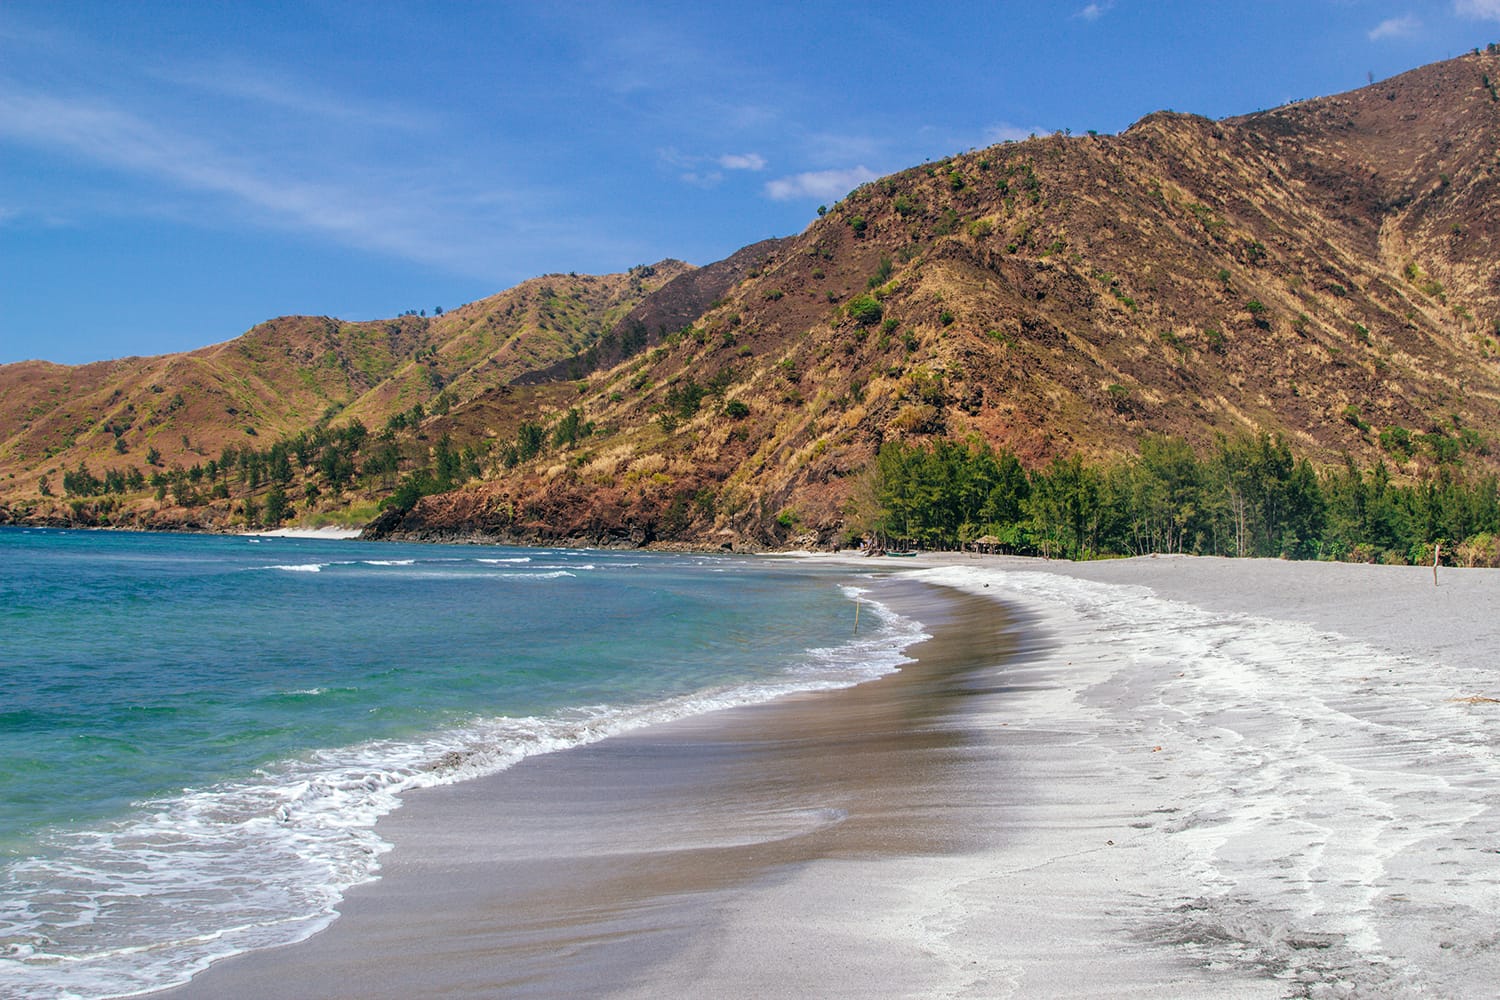 Nagsasa Cove, μια παραλία γεμάτη με ηφαιστειακή τέφρα από το όρος Pinatubo και καλυμμένη από θαλάσσια πεύκα στο San Antonio, Zambales, Φιλιππίνες